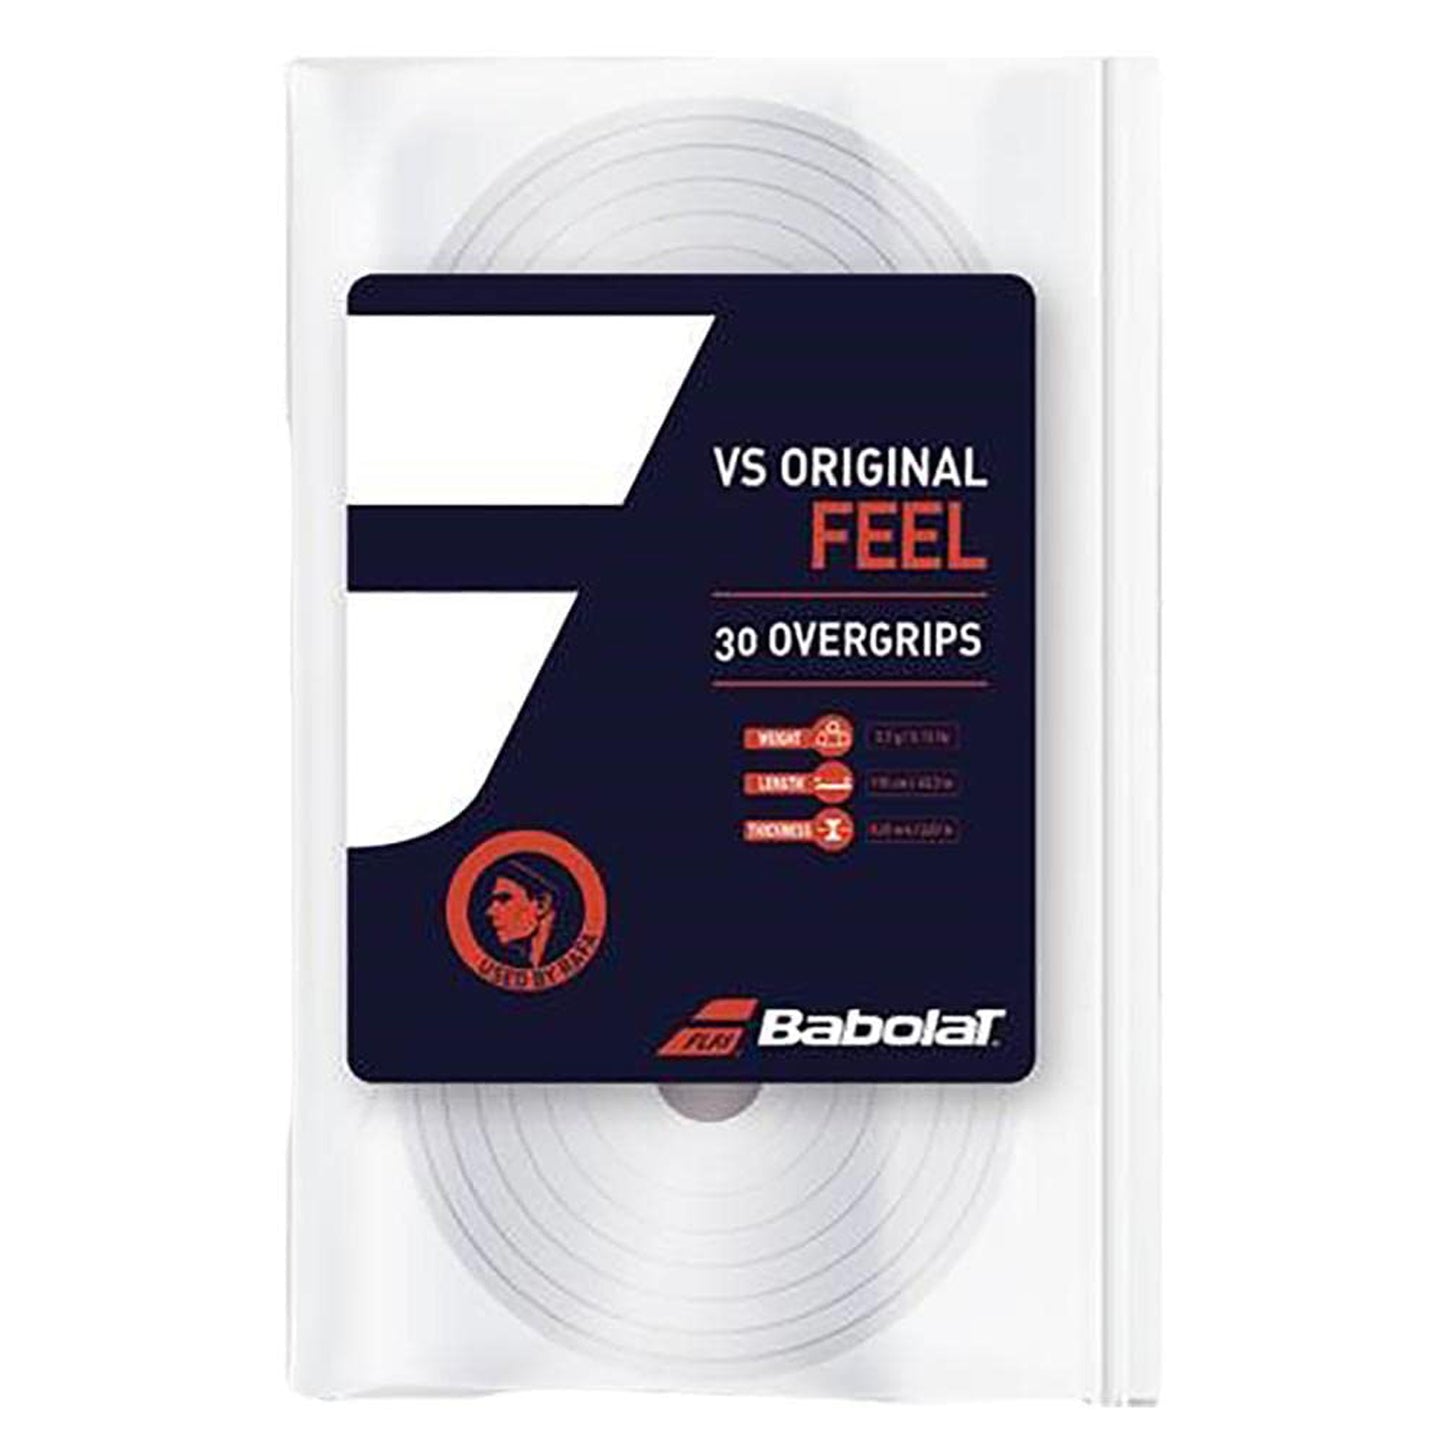 Babolat 657003-101 VS Original X30 Tennis Grips, 30 Overgrips - White - Best Price online Prokicksports.com